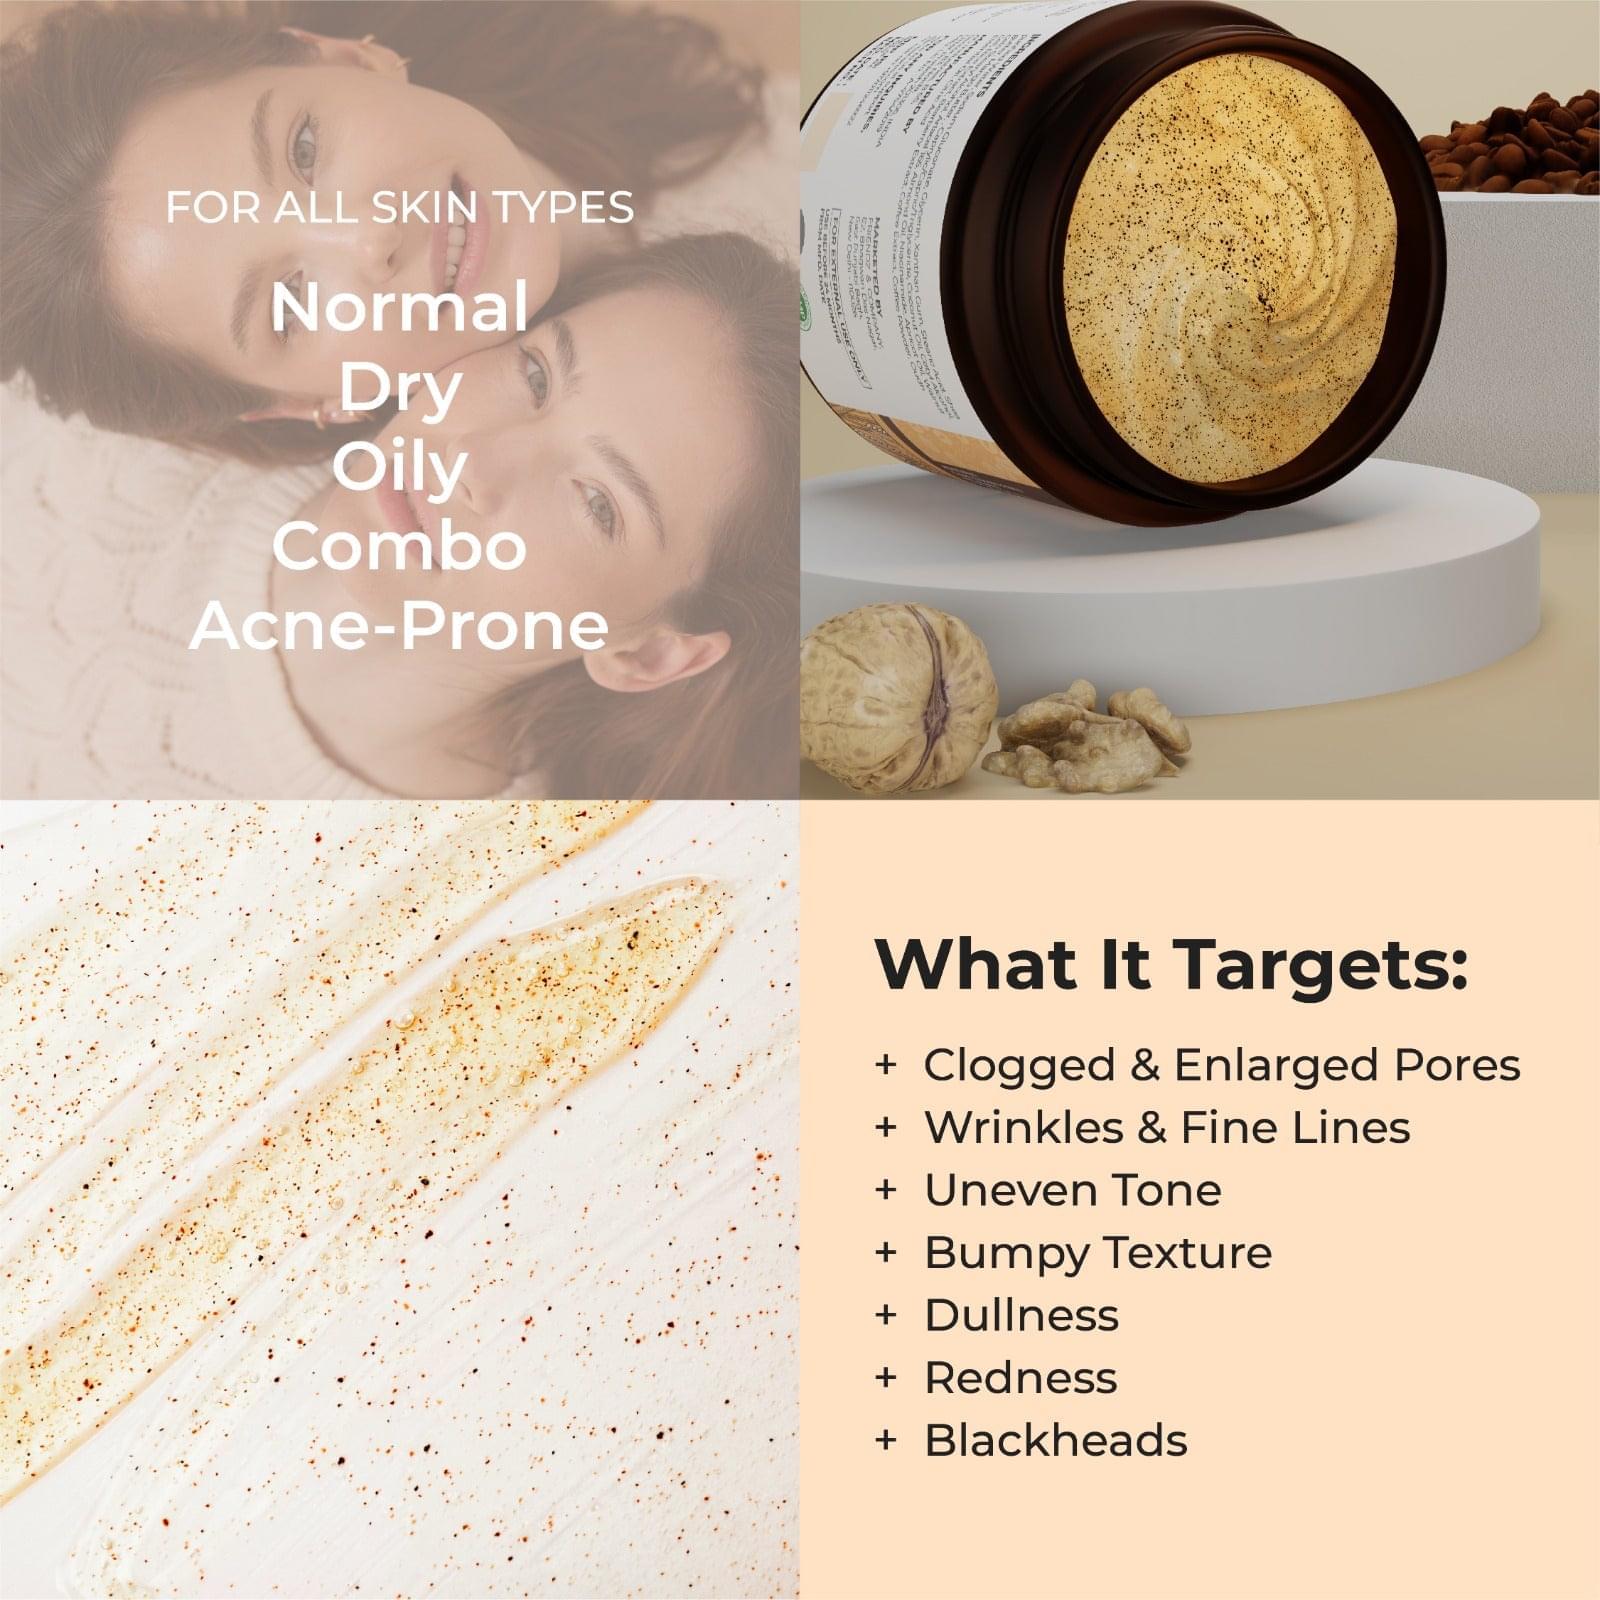 Nea Coffee Walnut Face Scrub with Rice Indulgence | Natural Exfoliation | #neacares